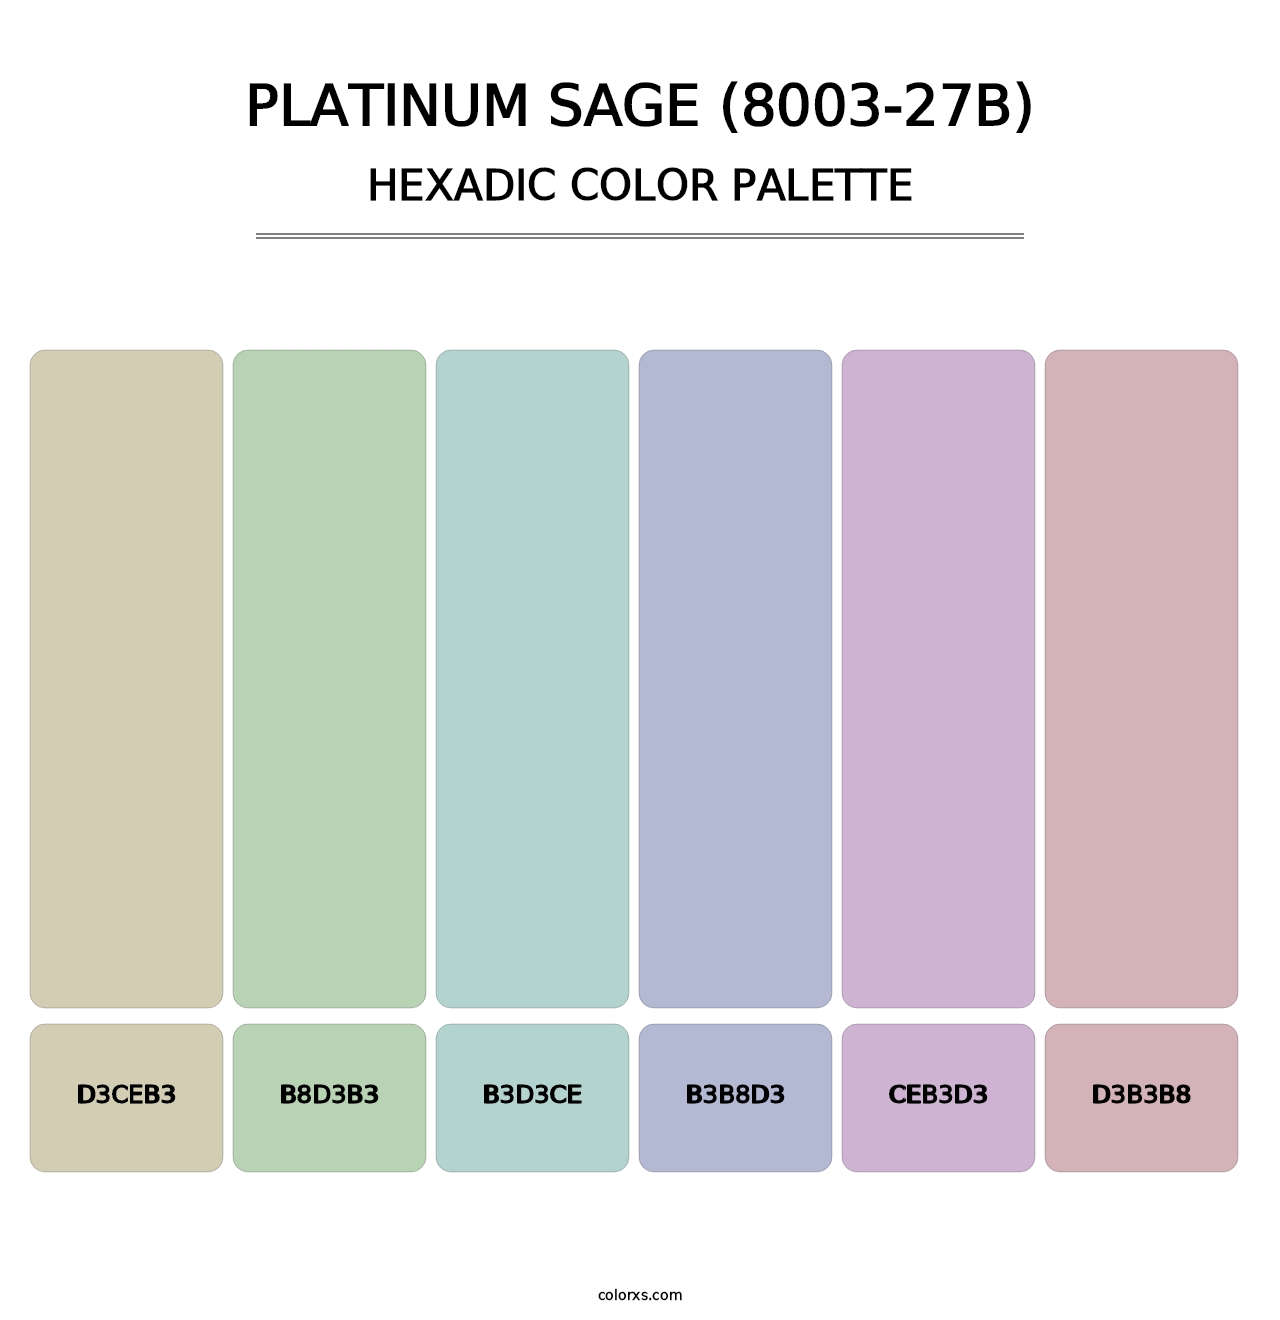 Platinum Sage (8003-27B) - Hexadic Color Palette